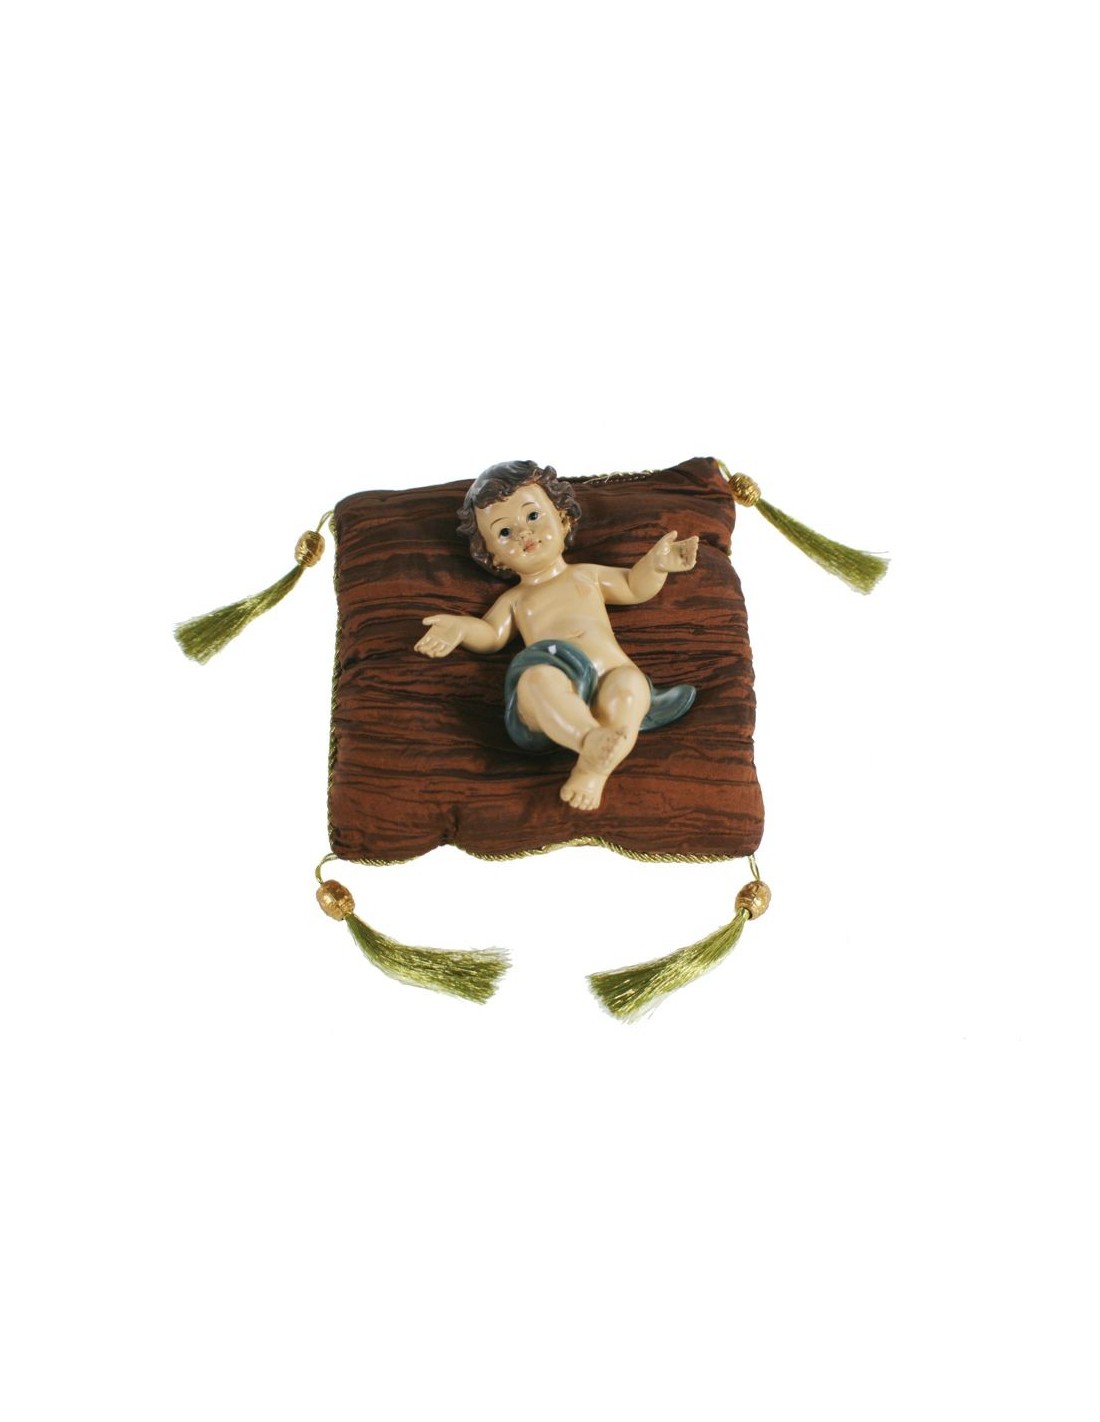 Niño Jesús en cojín figura religiosa de resina pintada a mano decoración hogar y Navideña. Medidas: 20x20 cm.